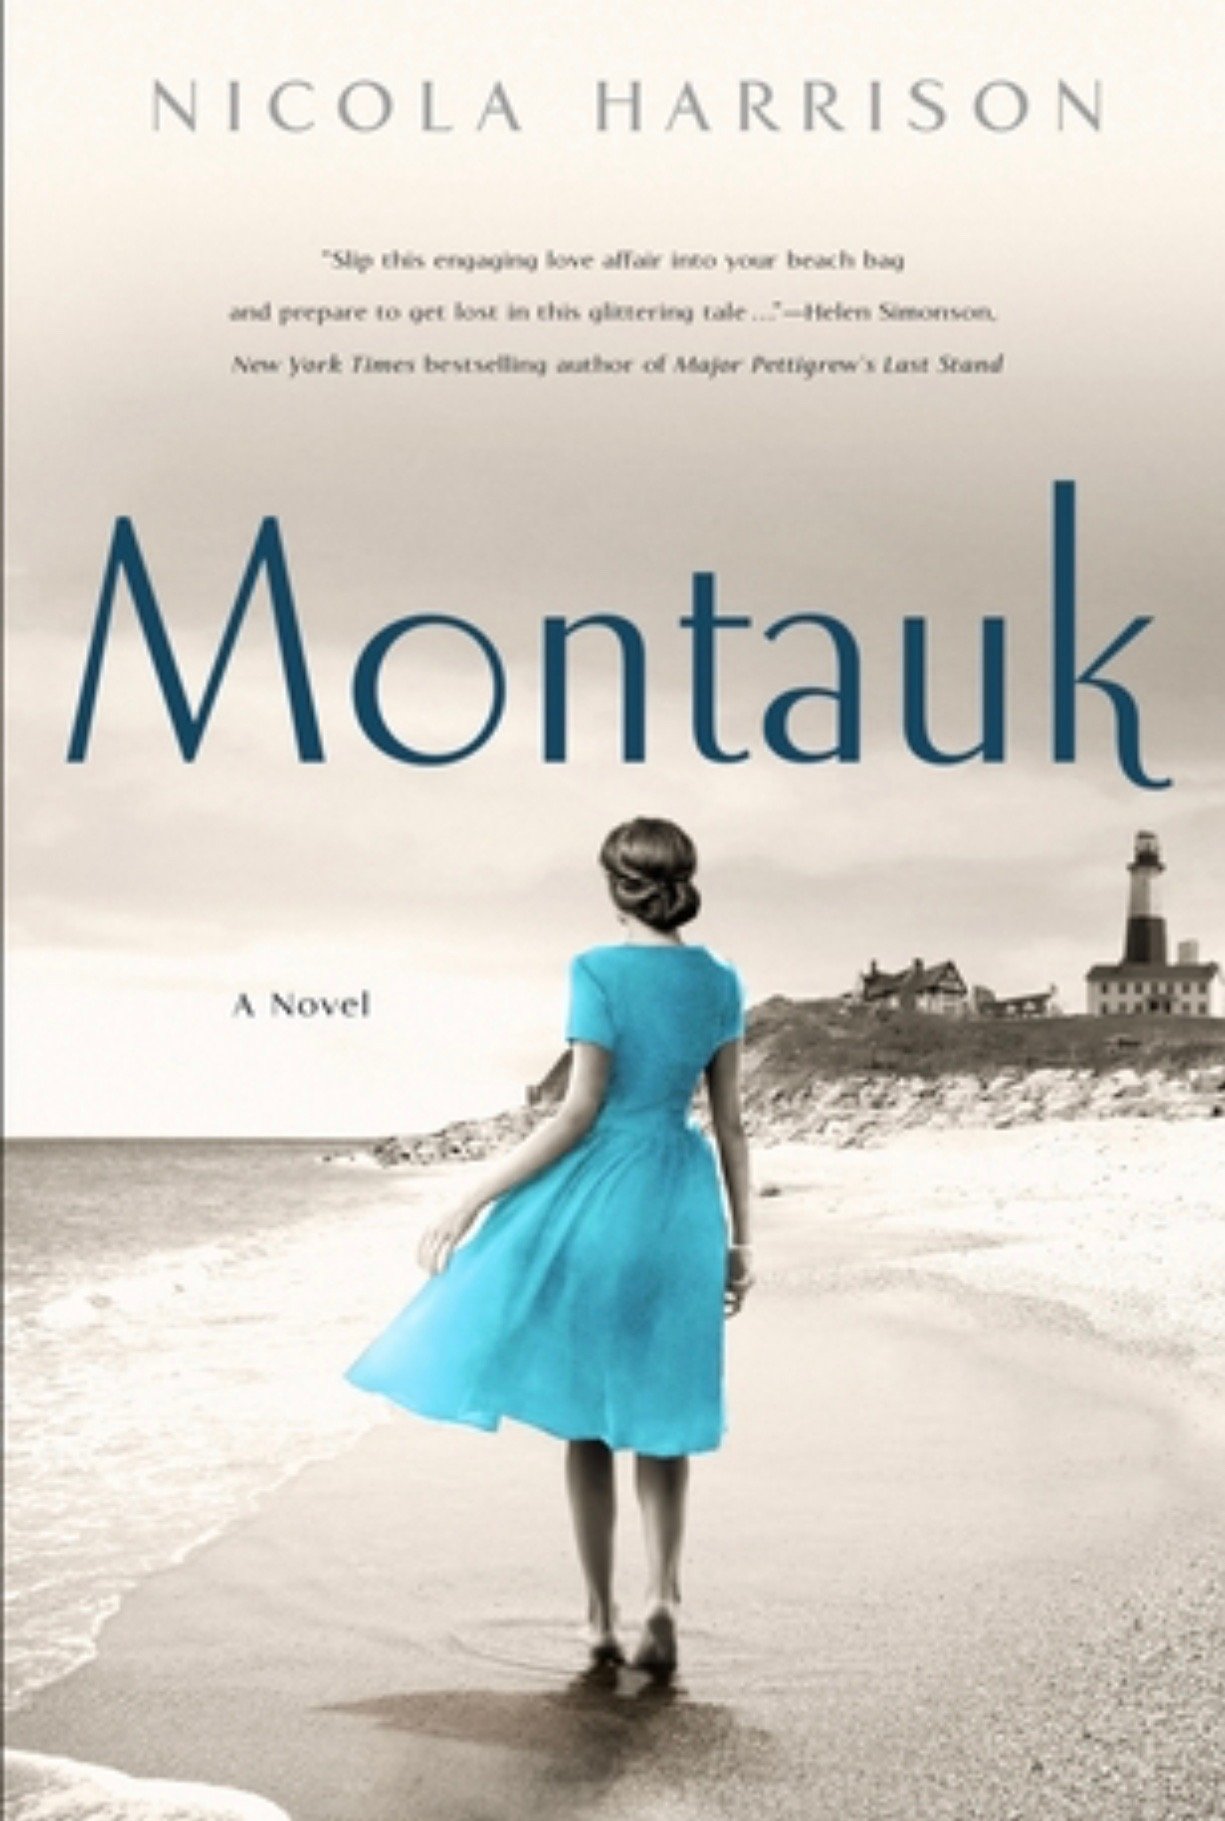 Review: Montauk by Nicola Harrison